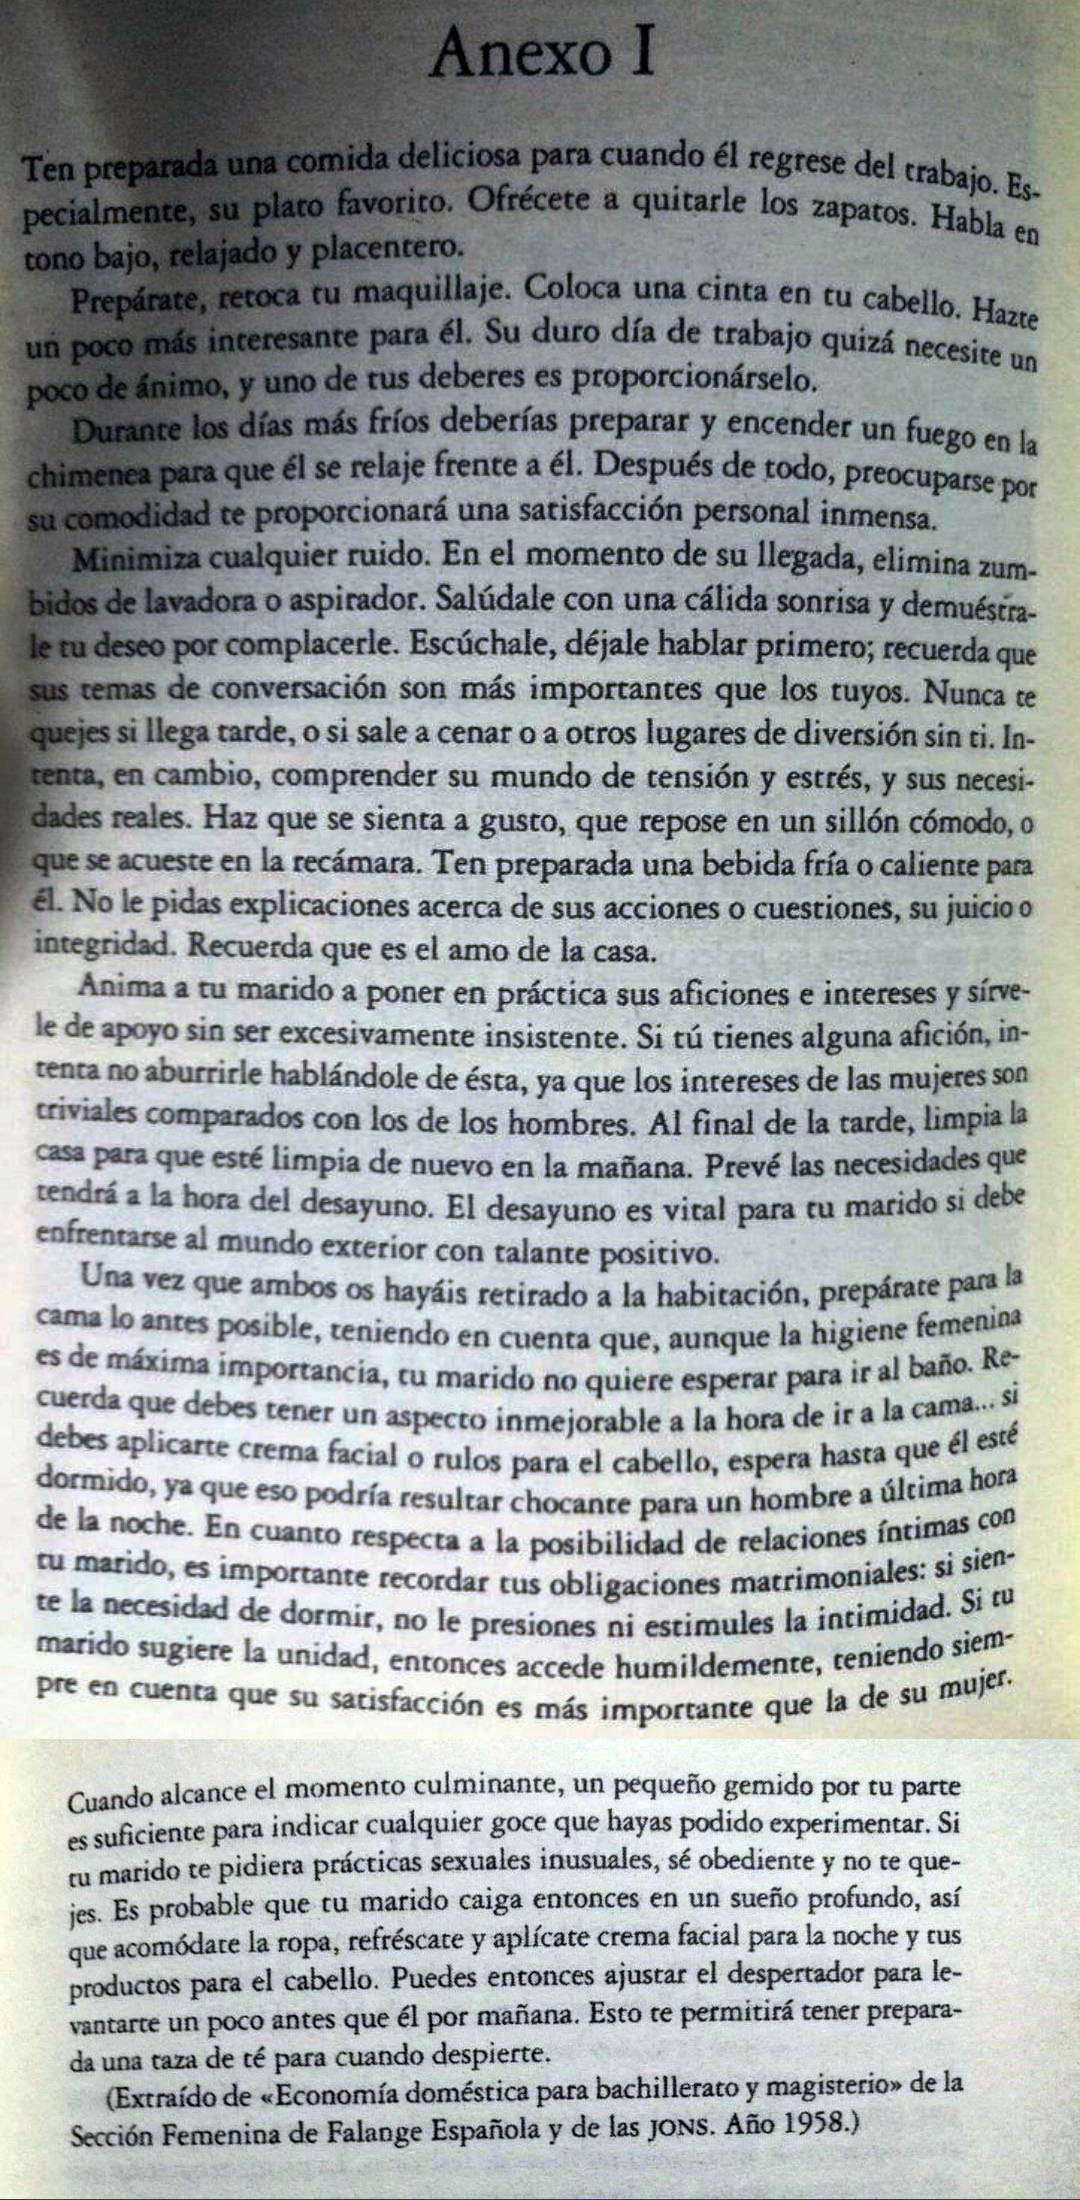 Economia domestica para bachillerato y magisterio. Seccion femenina de la falange española 1958 Recome10